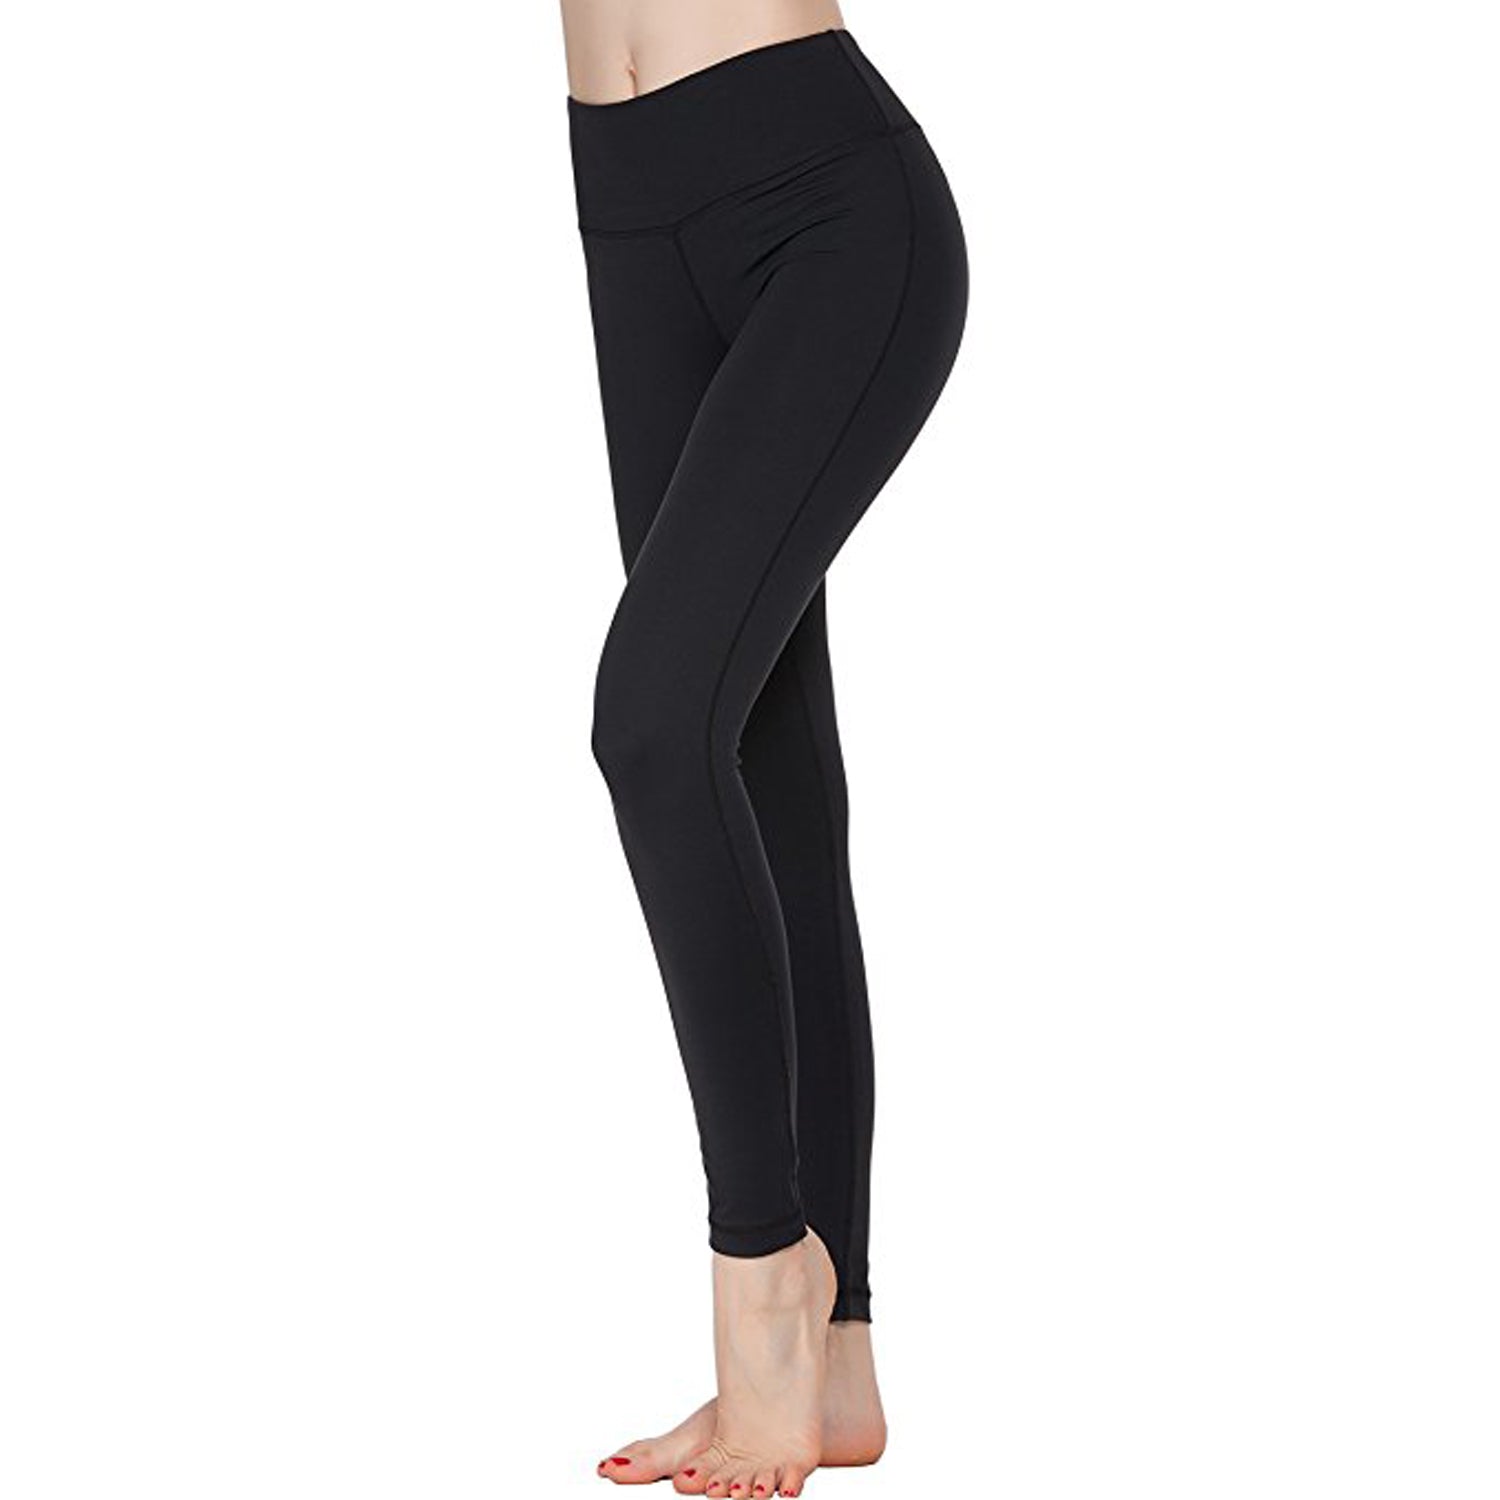 Women Power Flex Yoga Pants Workout Running Leggings - Perfect for everyday use - Everyday Crosstrain